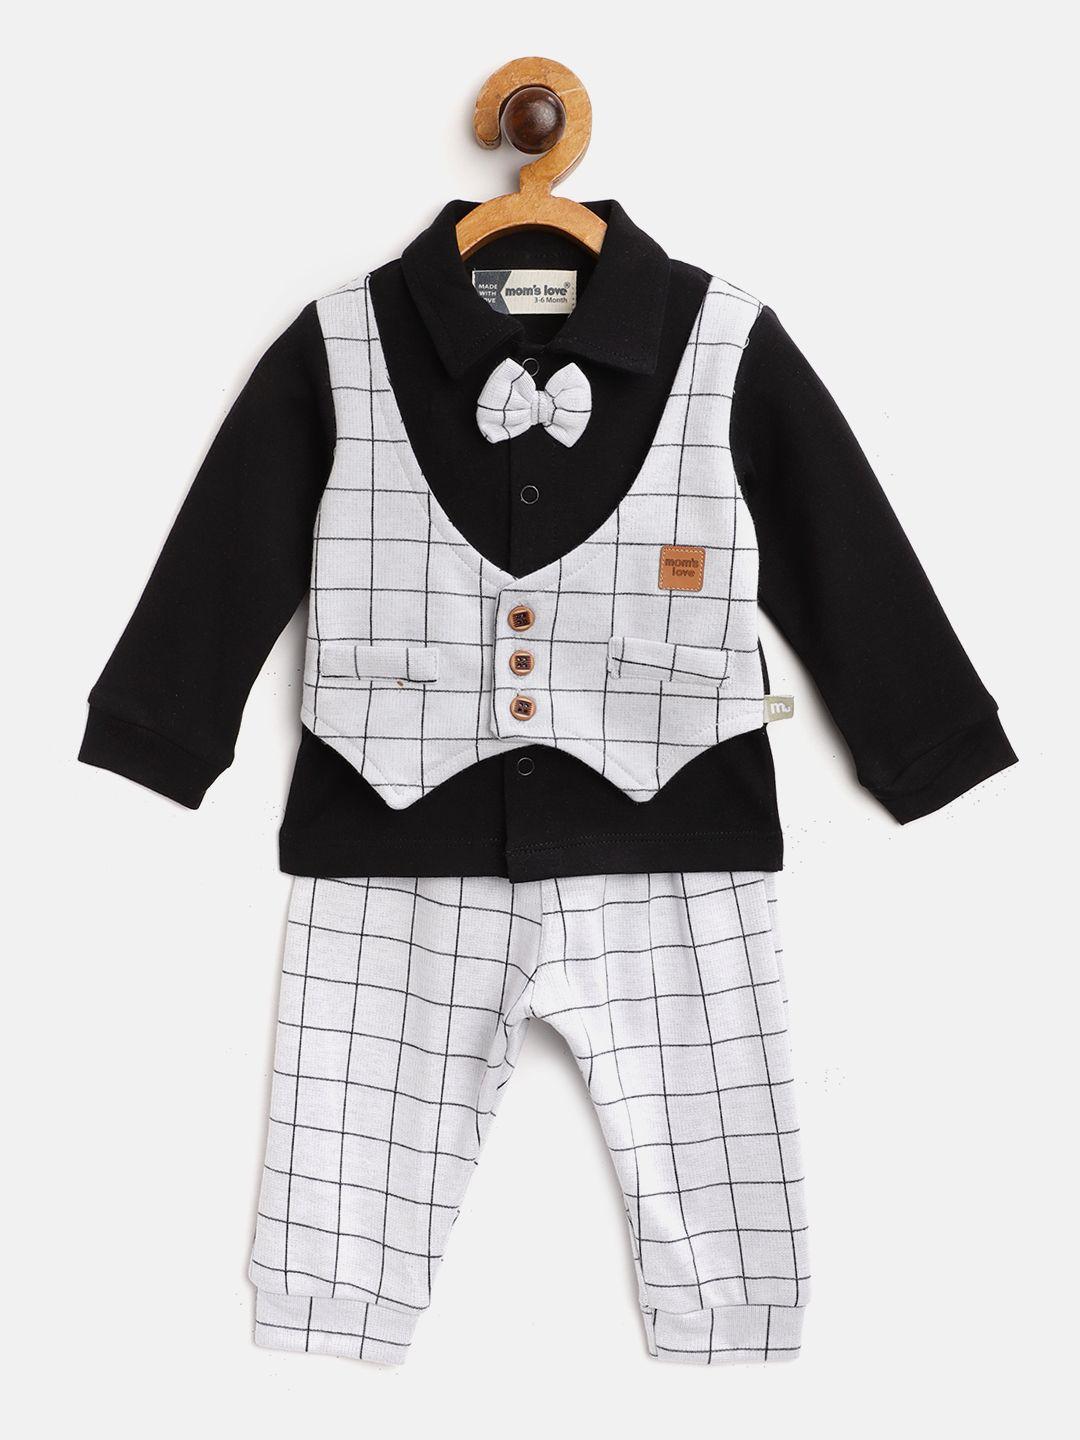 moms love infant boys black & off-white checked cotton clothing set